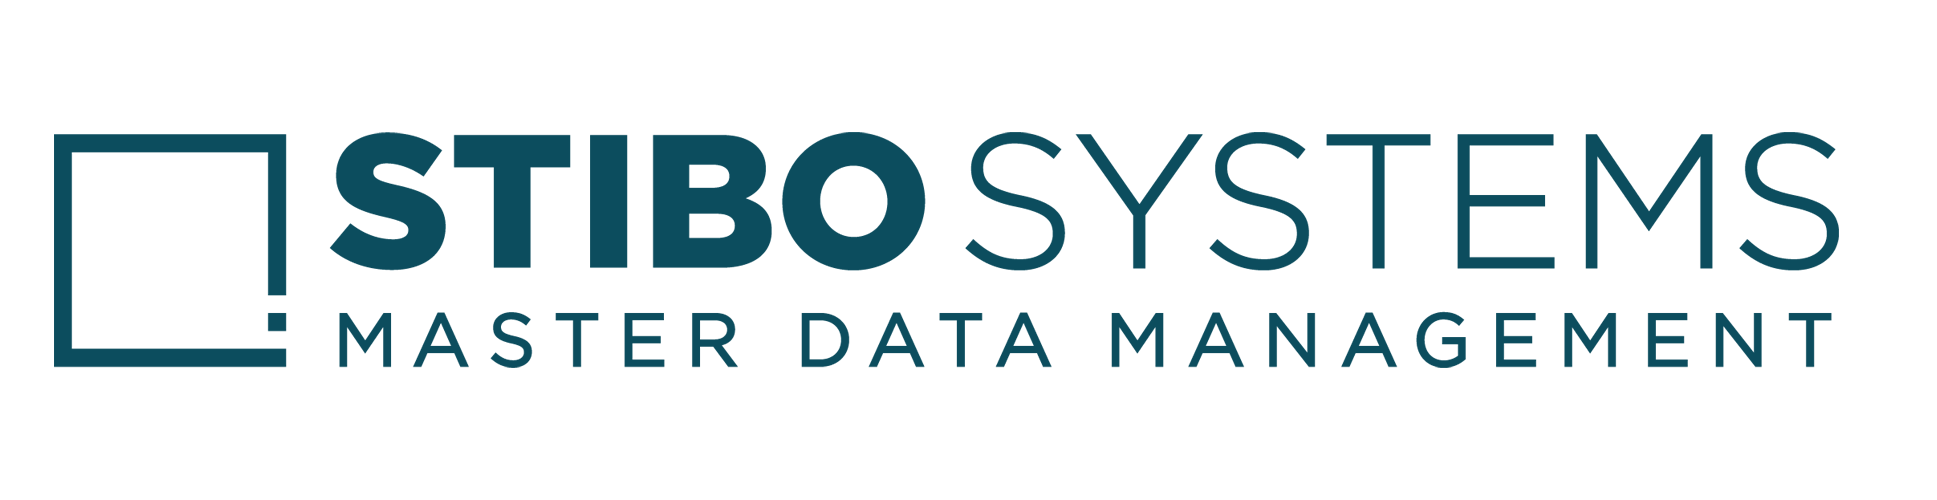 b-synced_PartnerLogos_Stibo